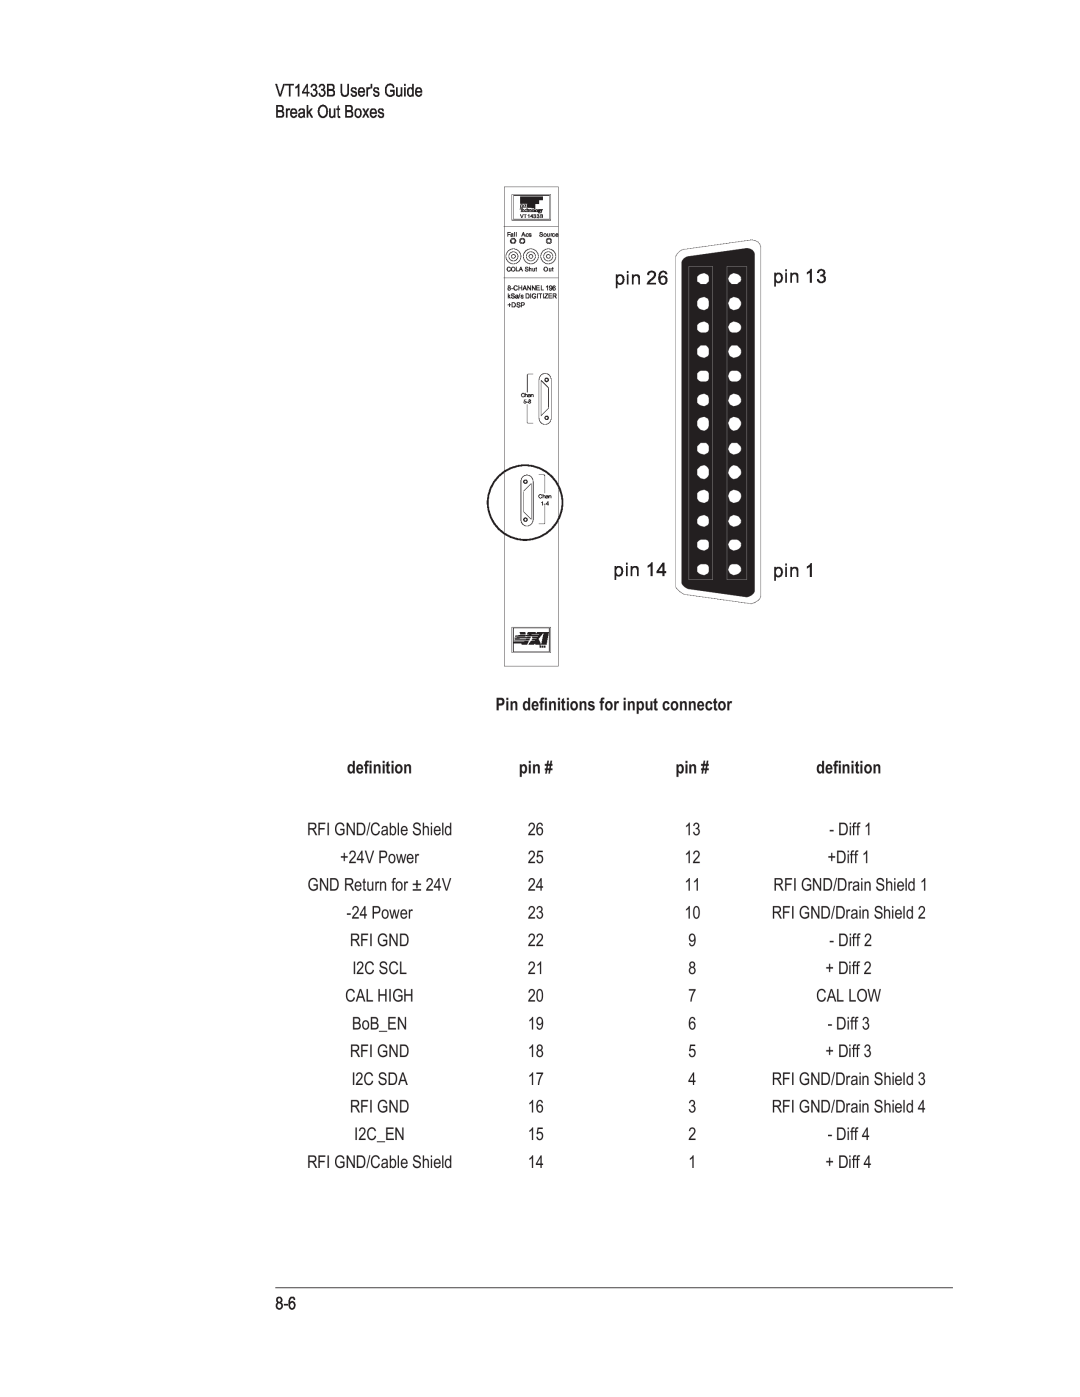 VXI VT1433B manual pin pin, Pin definitions for input connector, pin # 